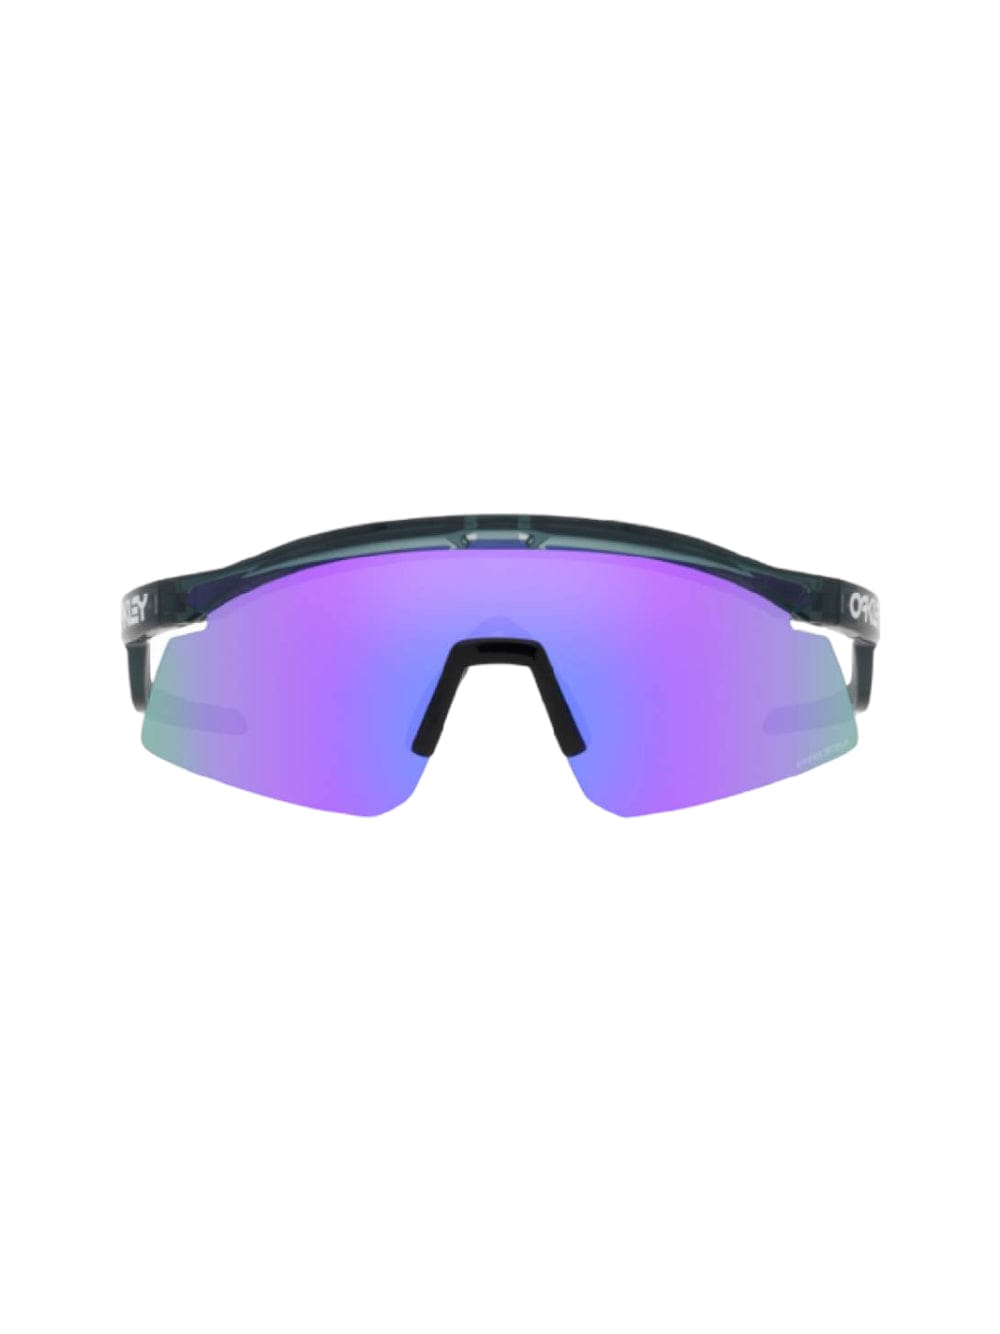 Hydra - 9229 Sunglasses